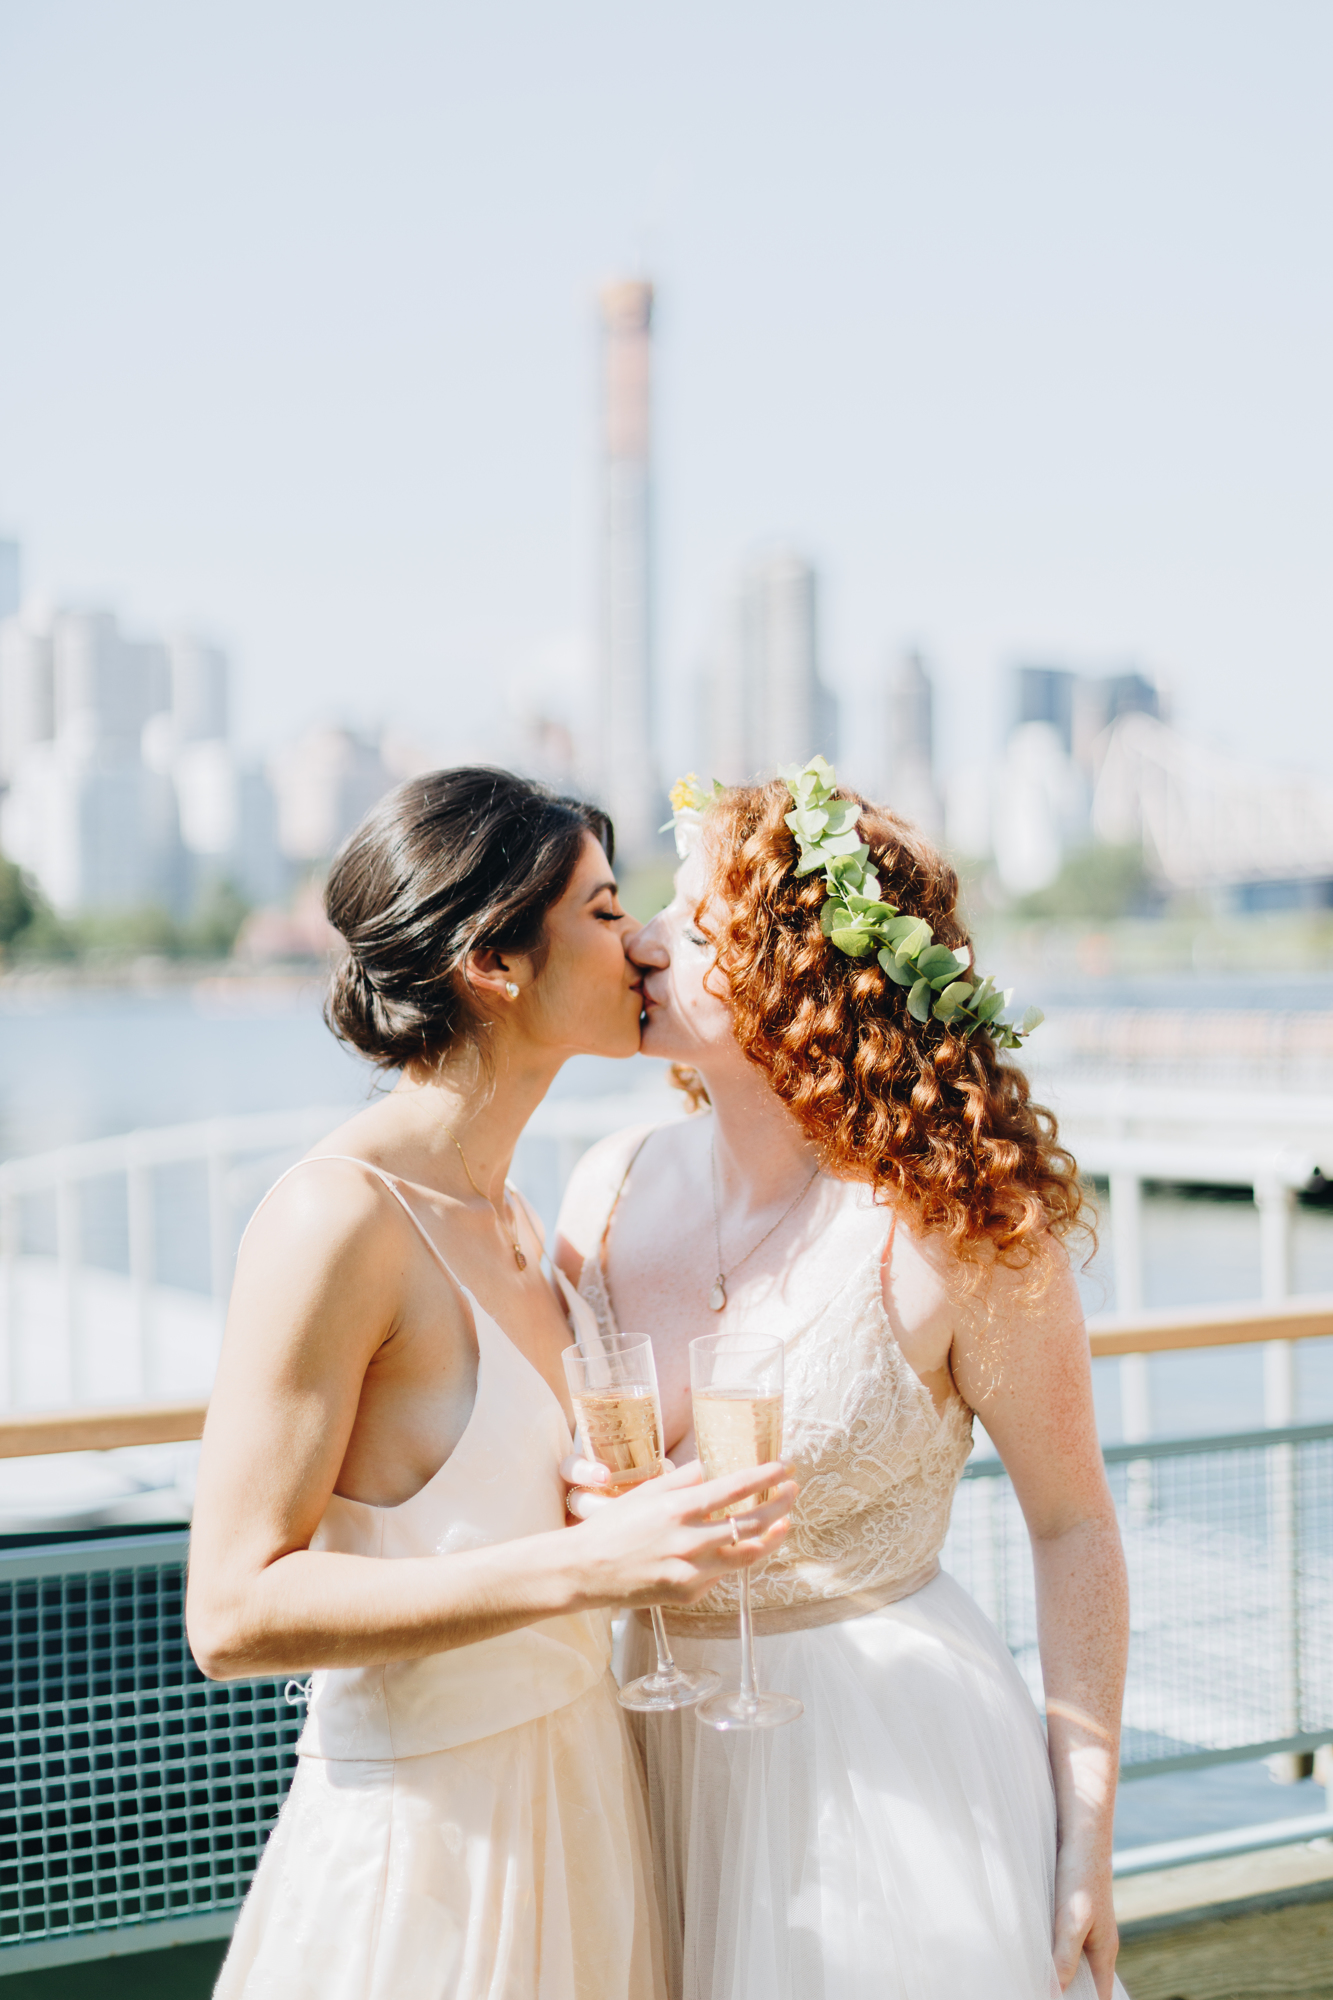 Intimate Radiant LGBTQ Wedding Inspiration at Sound River Studios